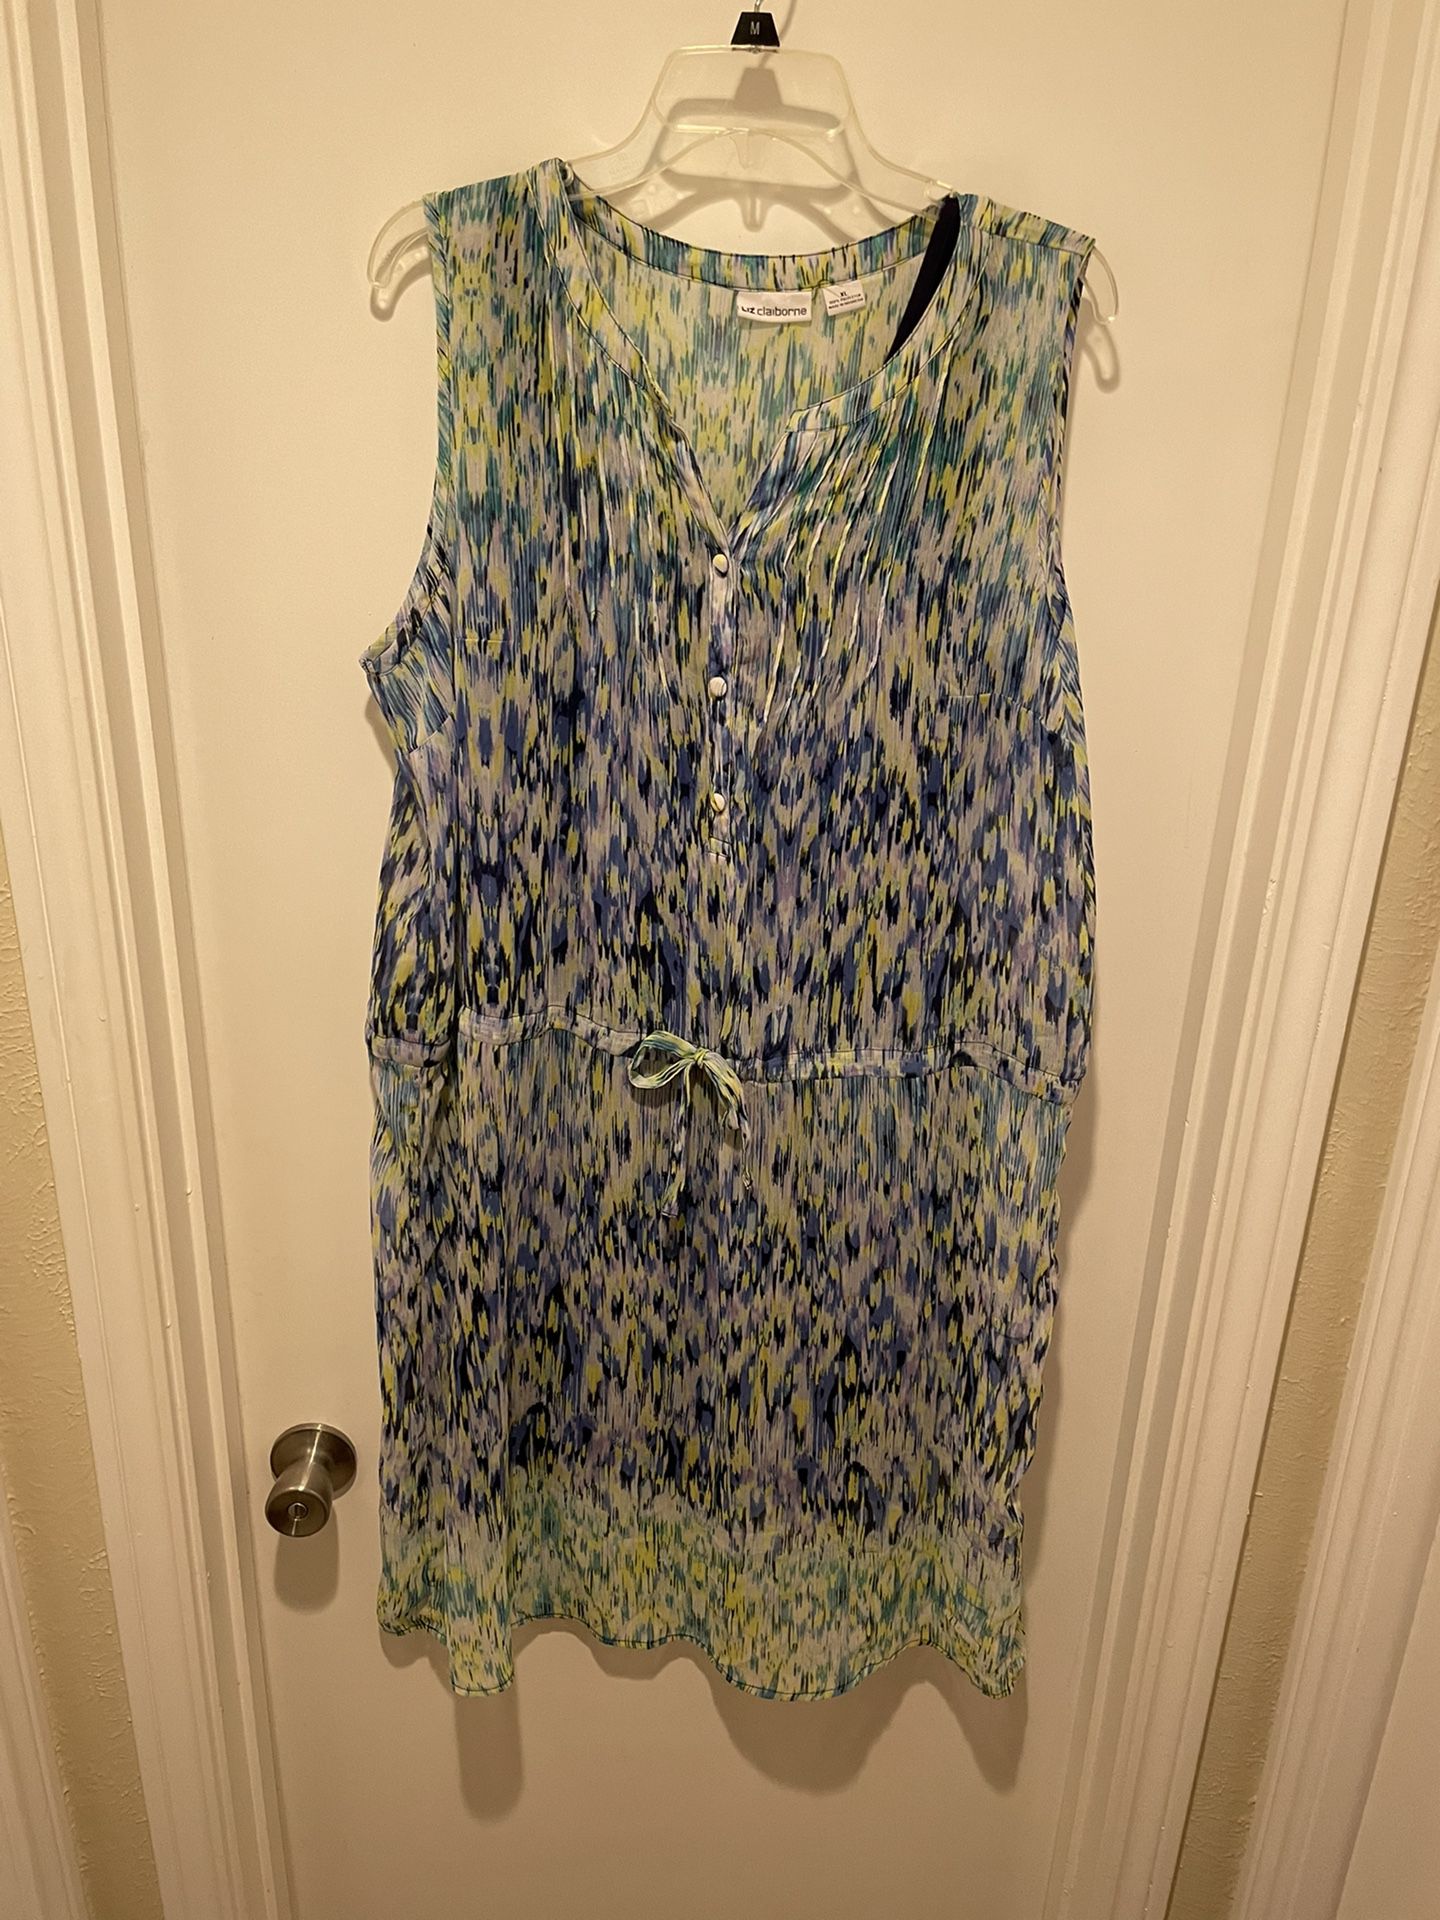 Liz Claiborne Yellow & Navy Floral Print Dress Size XL